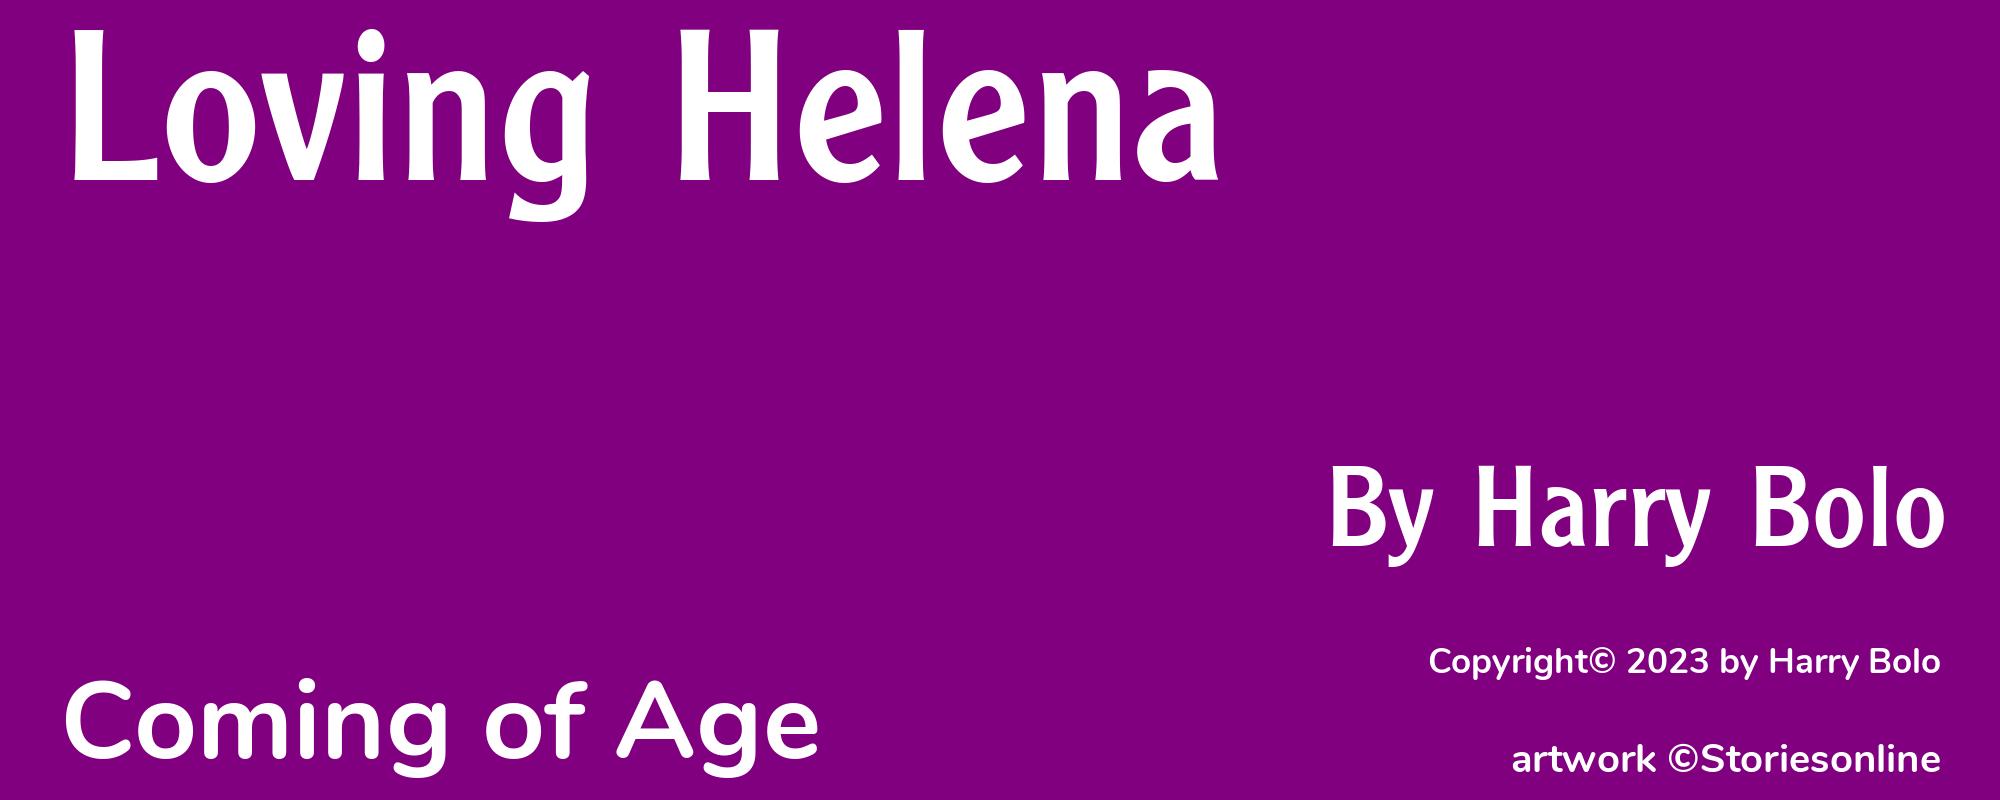 Loving Helena - Cover